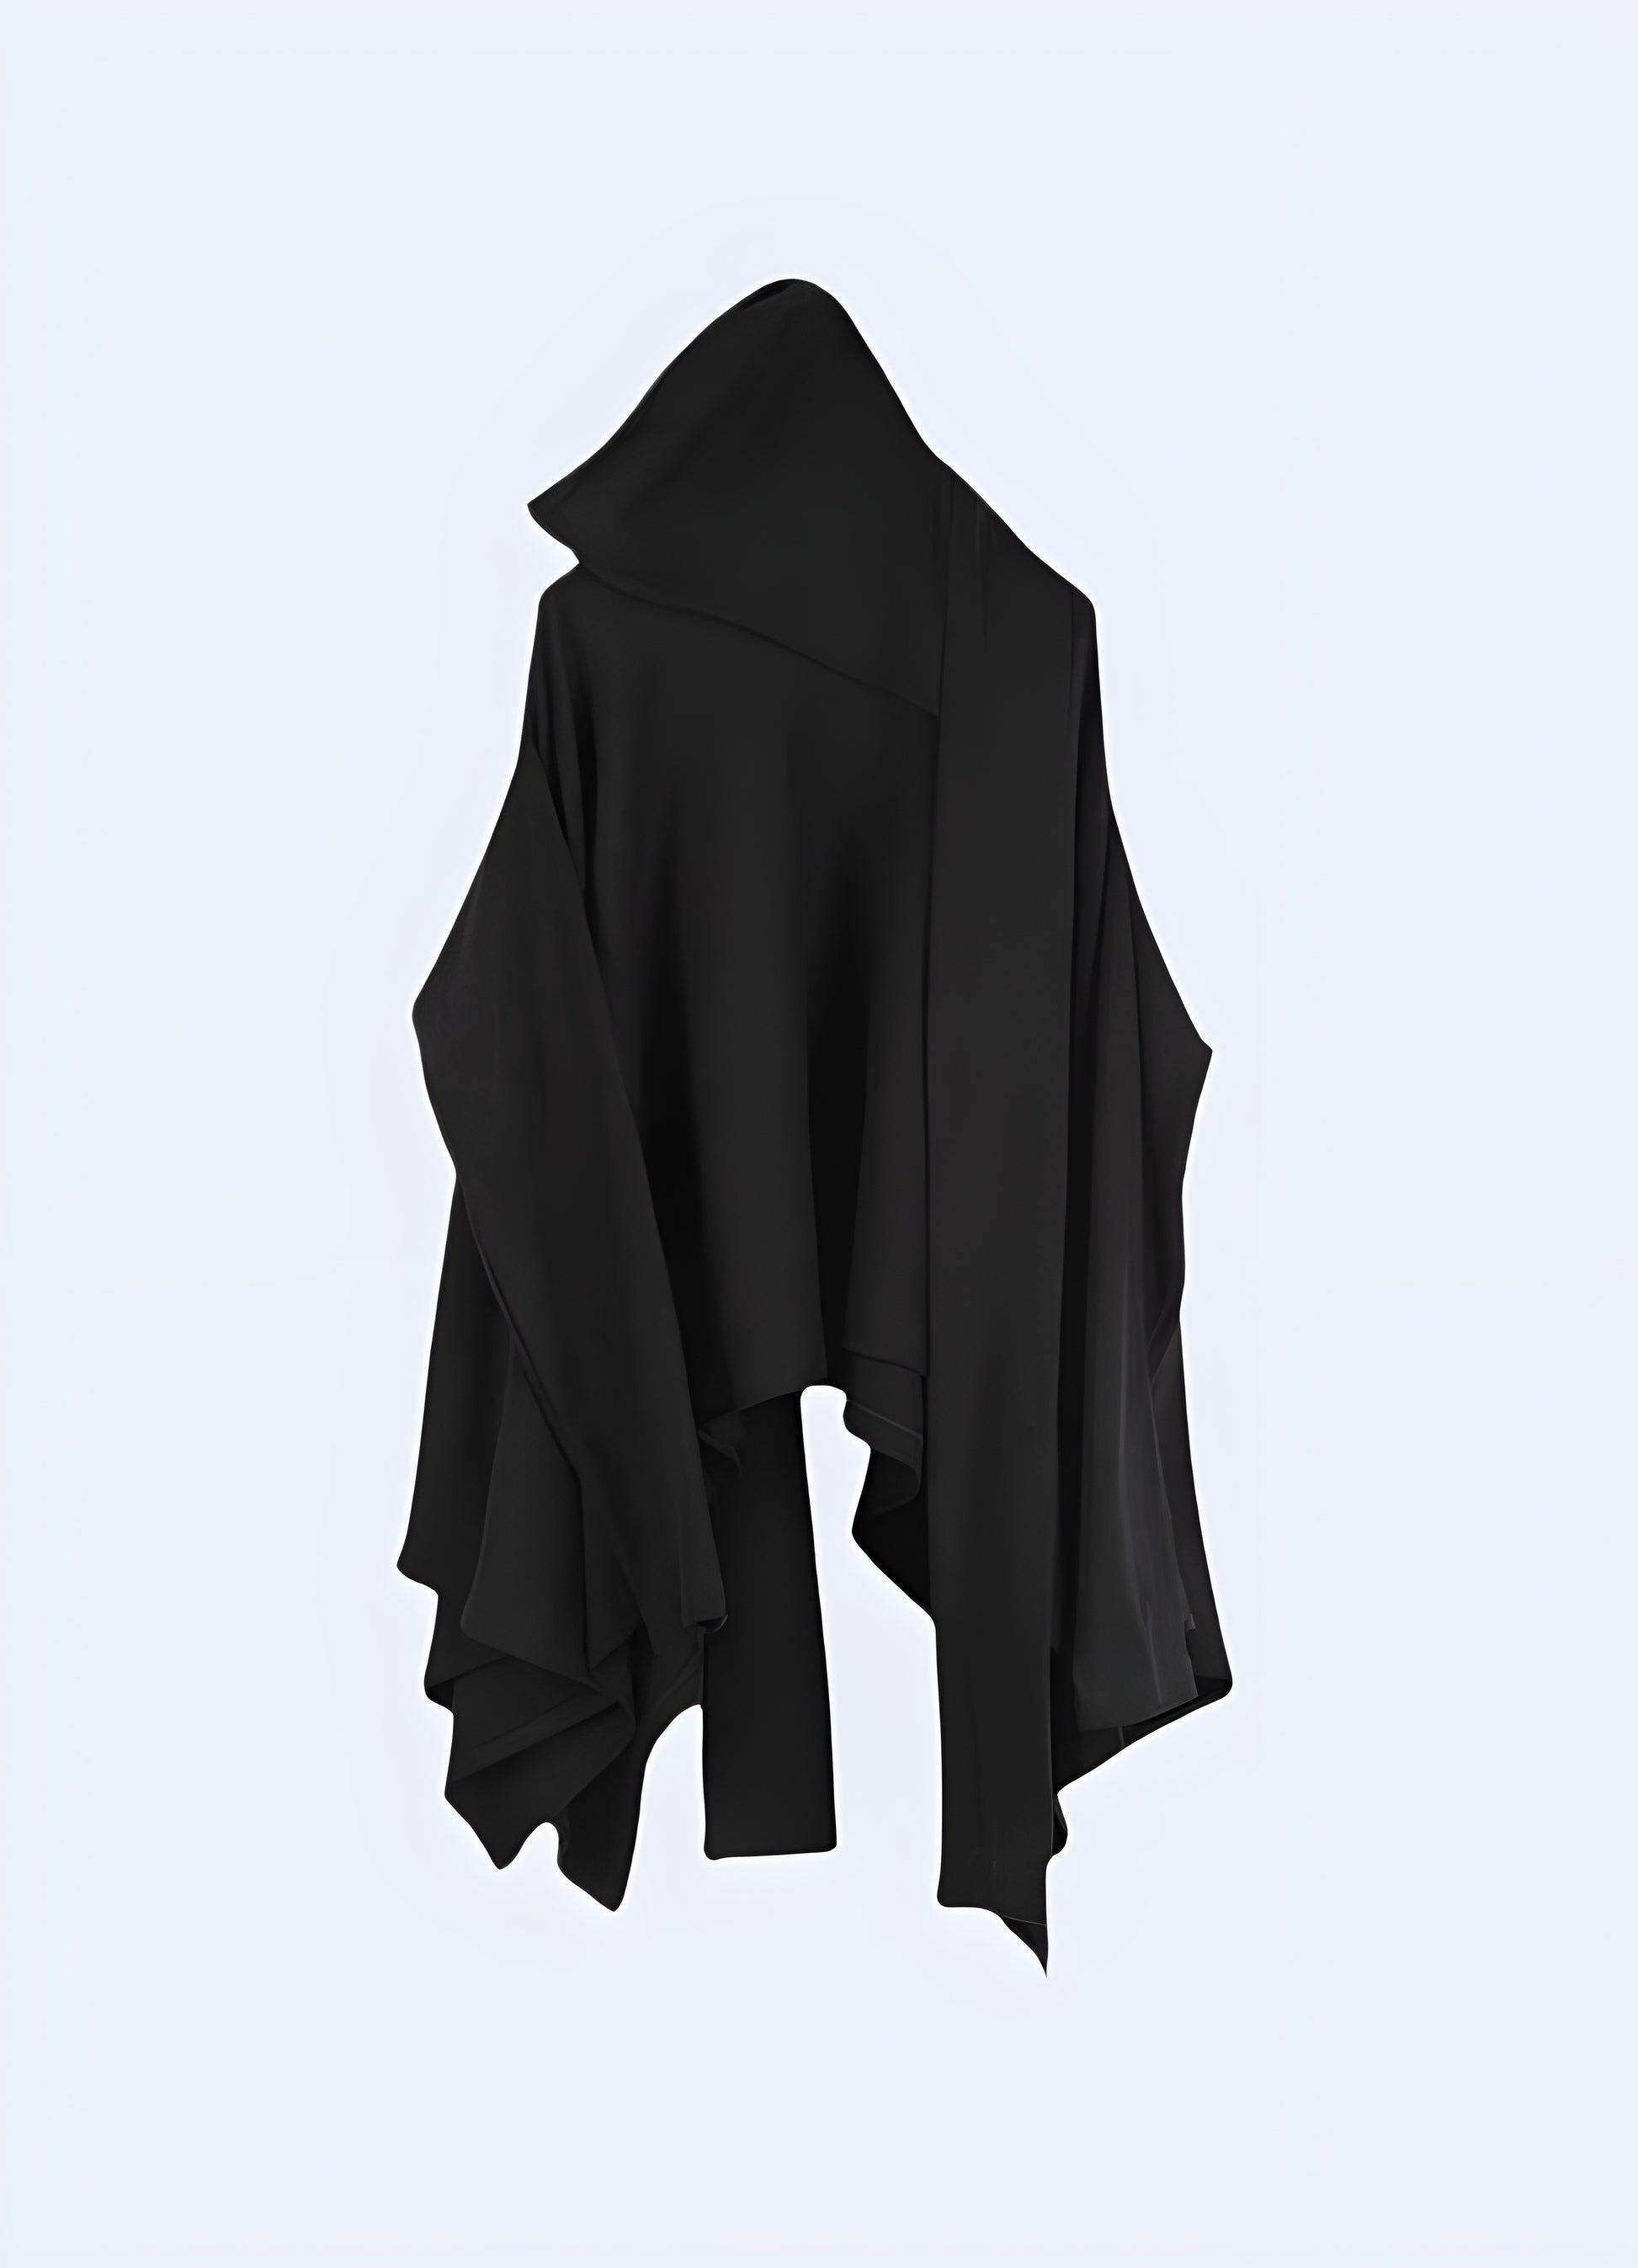 Cloak coat with hood ninja style unisex.